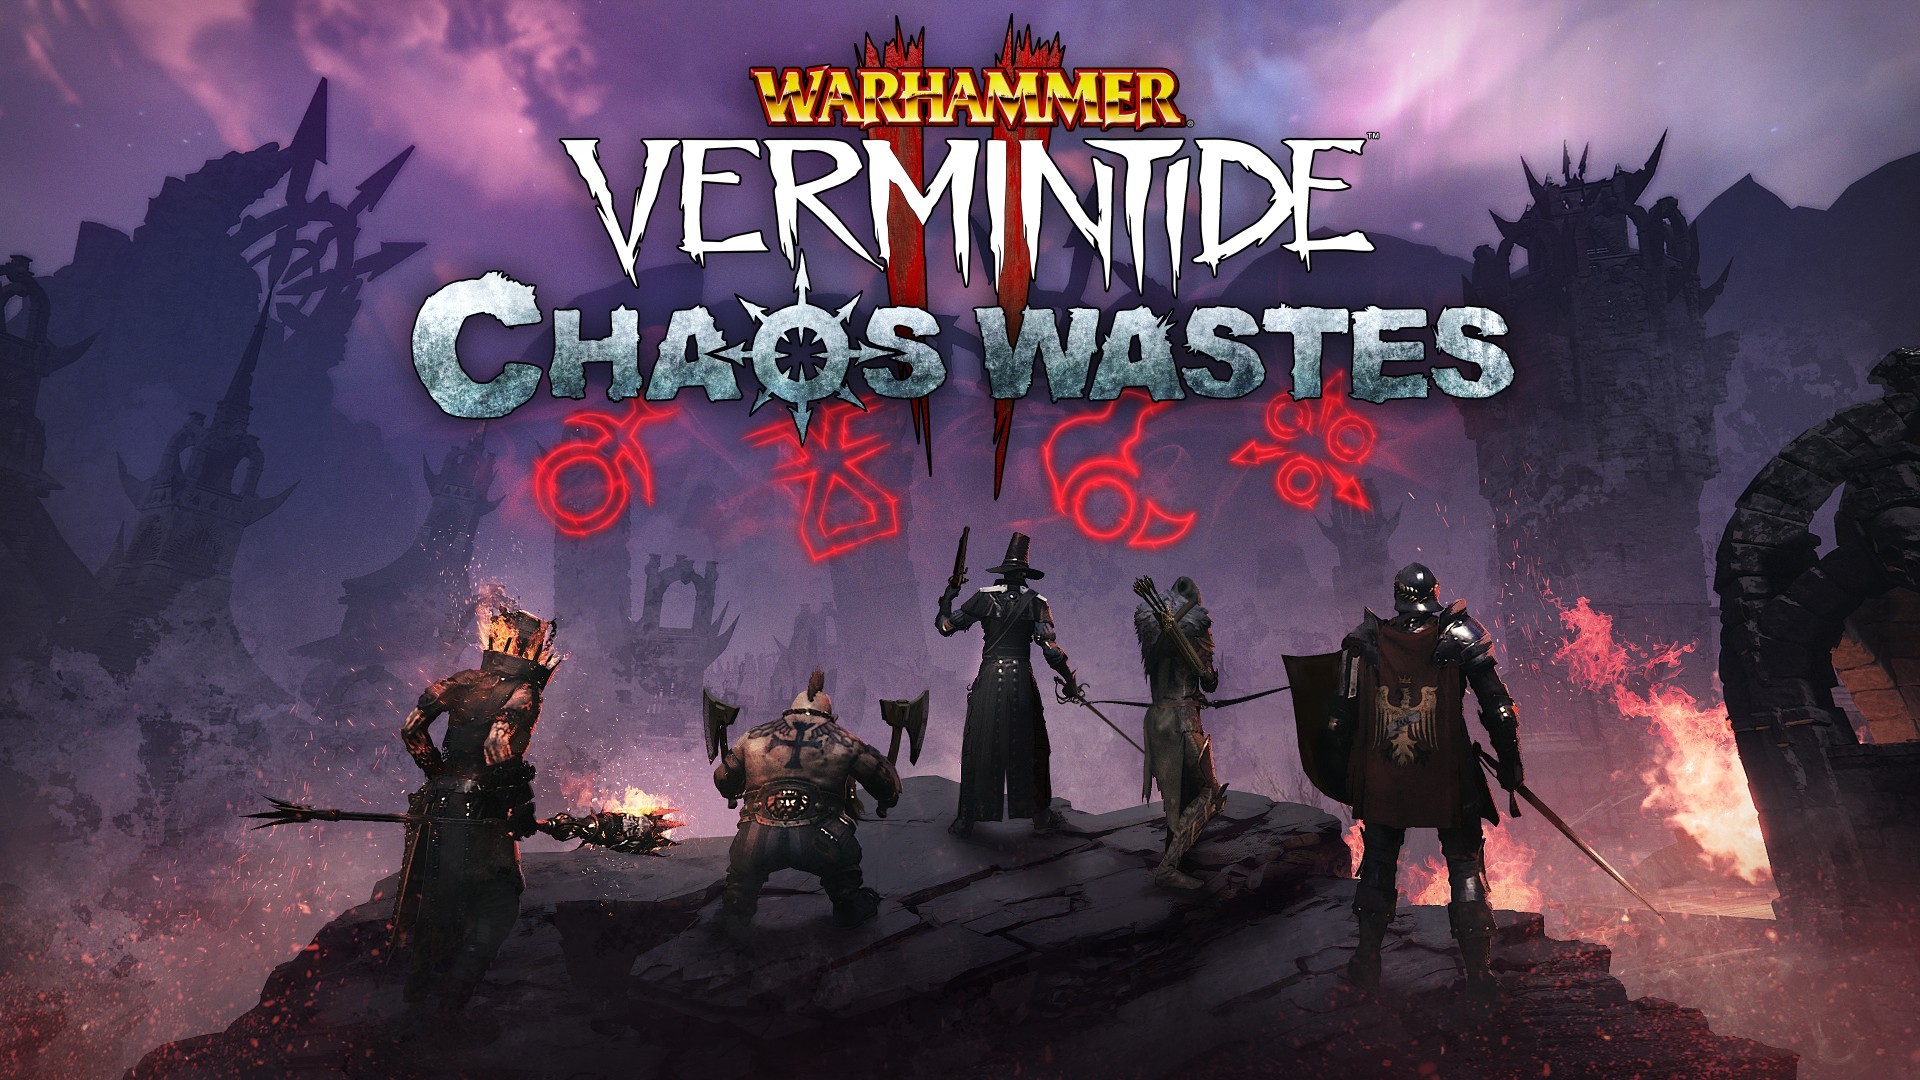 Vermintide 2 - Chaos Desert